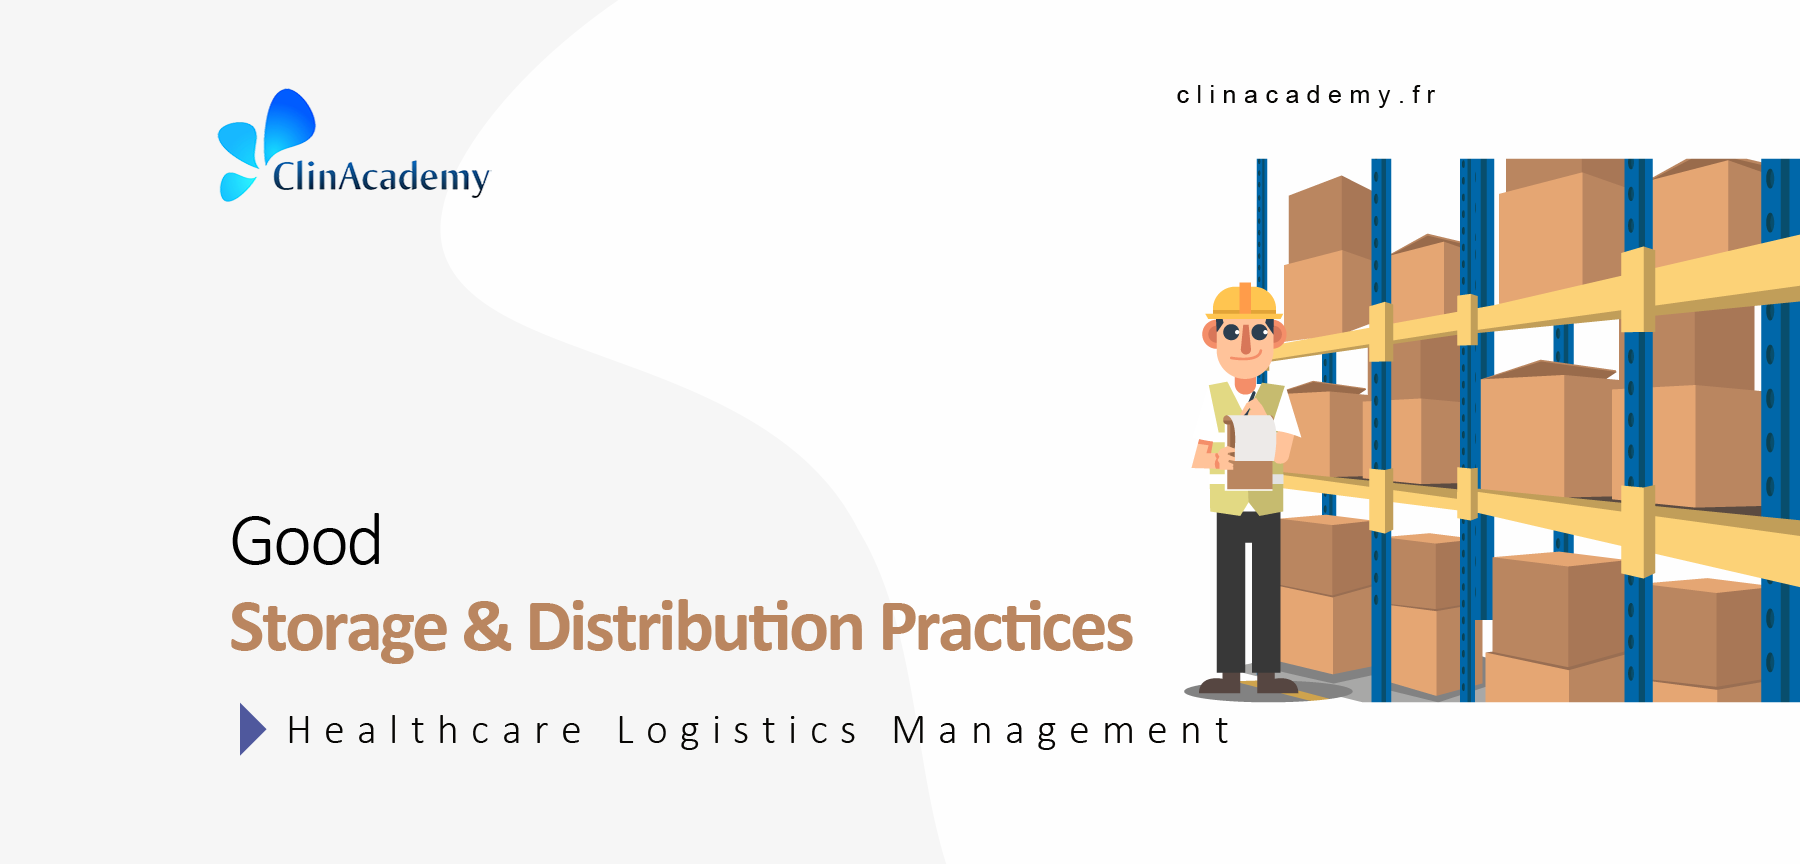 Good Storage & Distribution Practices